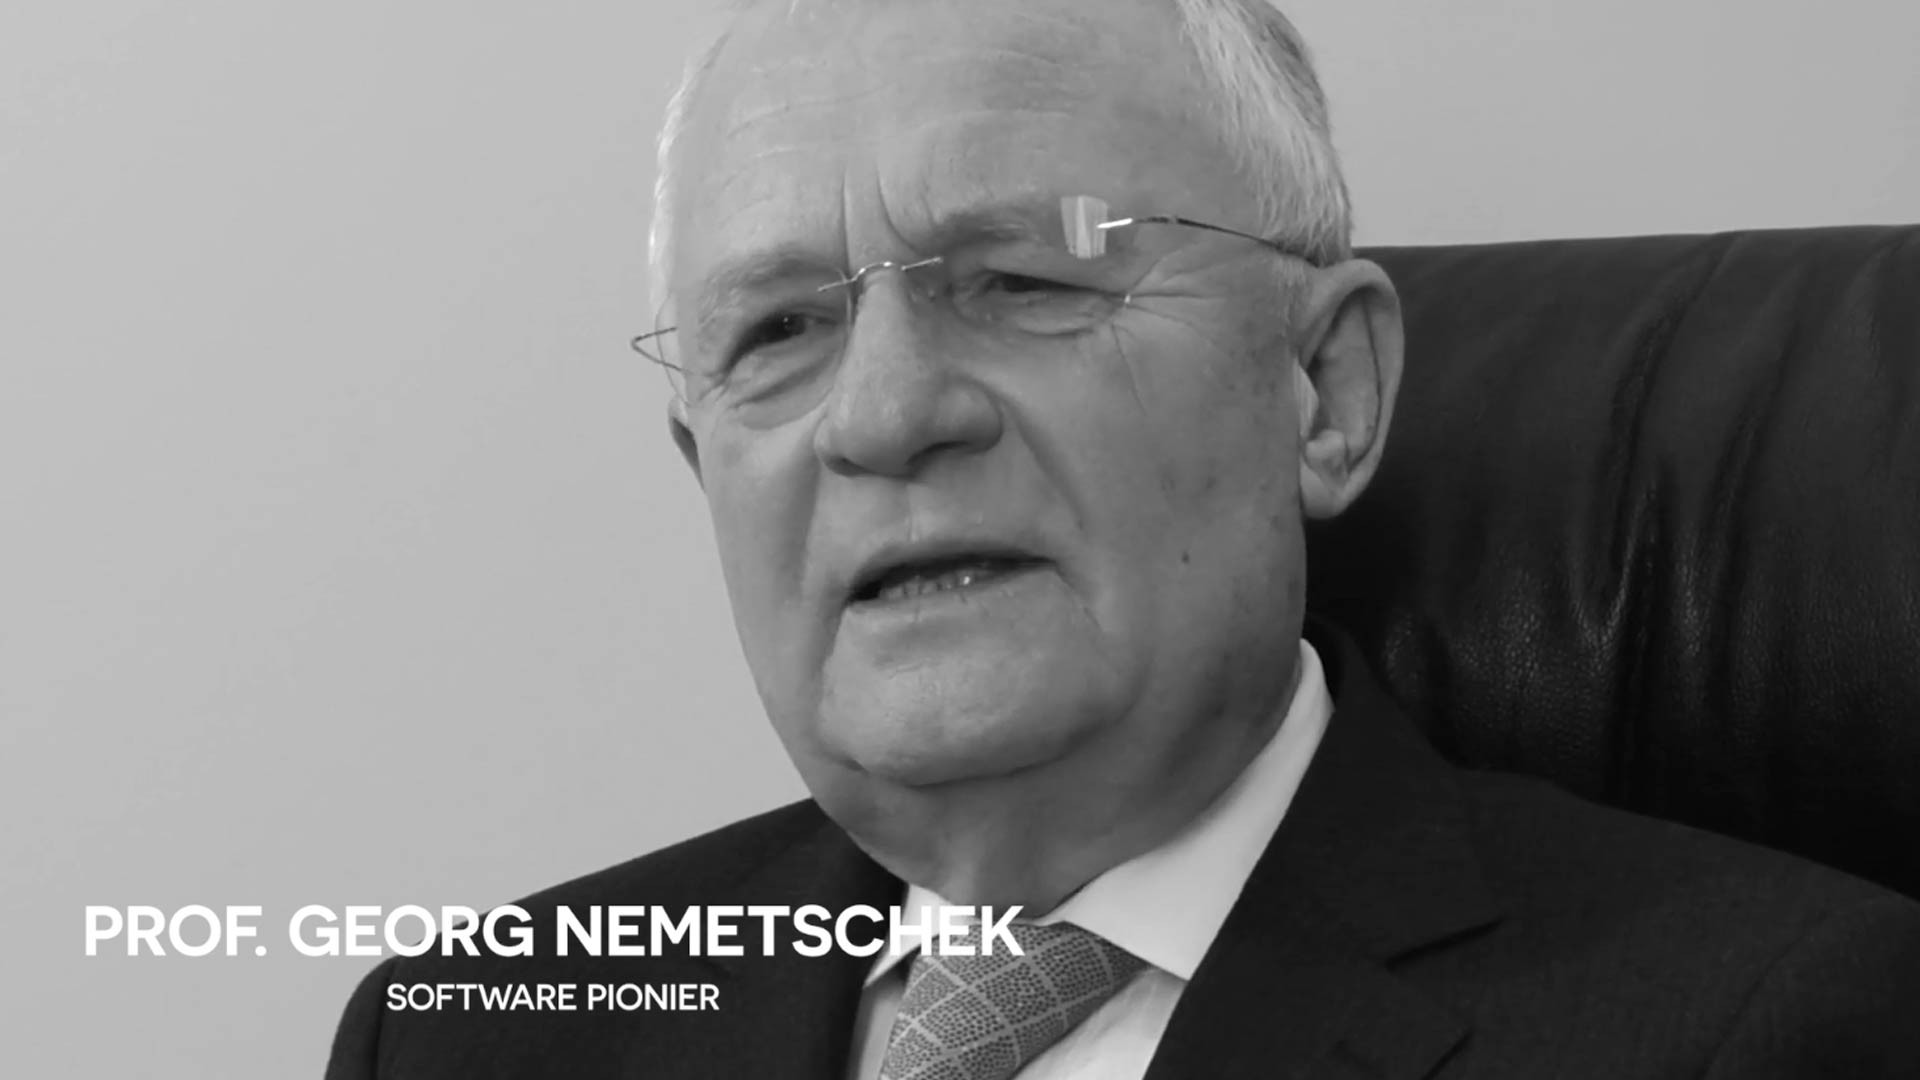 Nemetschek – Software Pionier